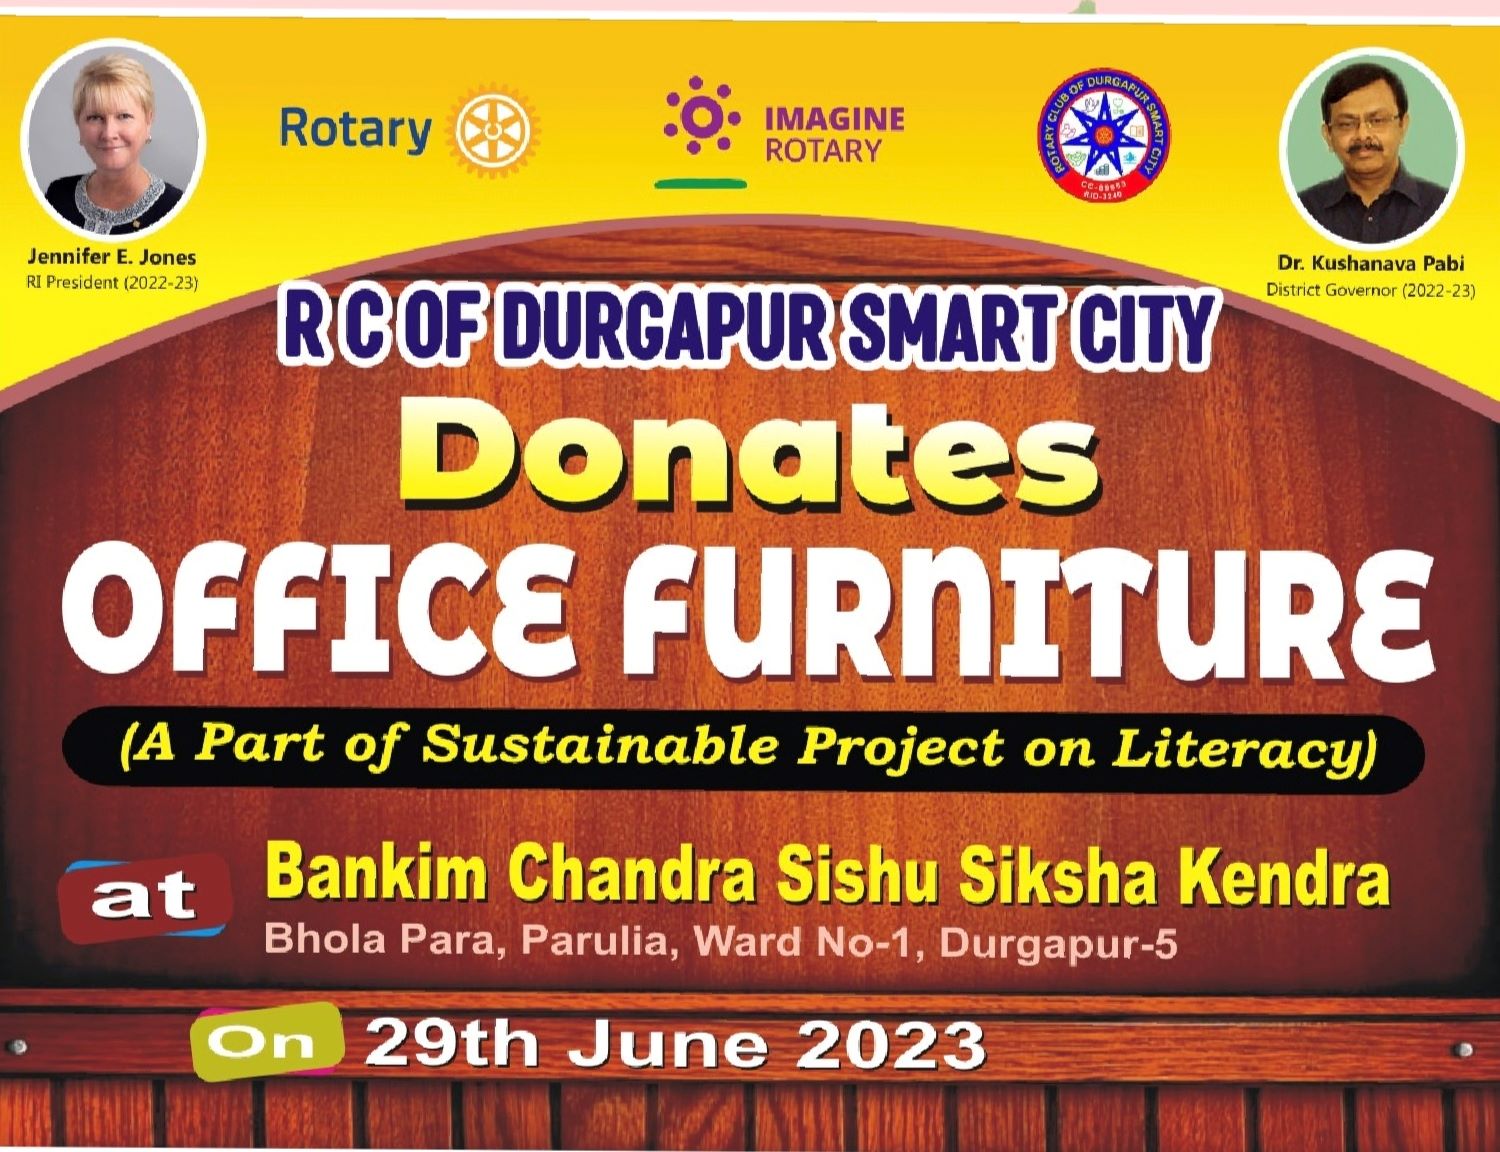 Donation of Office furniture to Bankim Chandra Sisu Sikhha Kendra